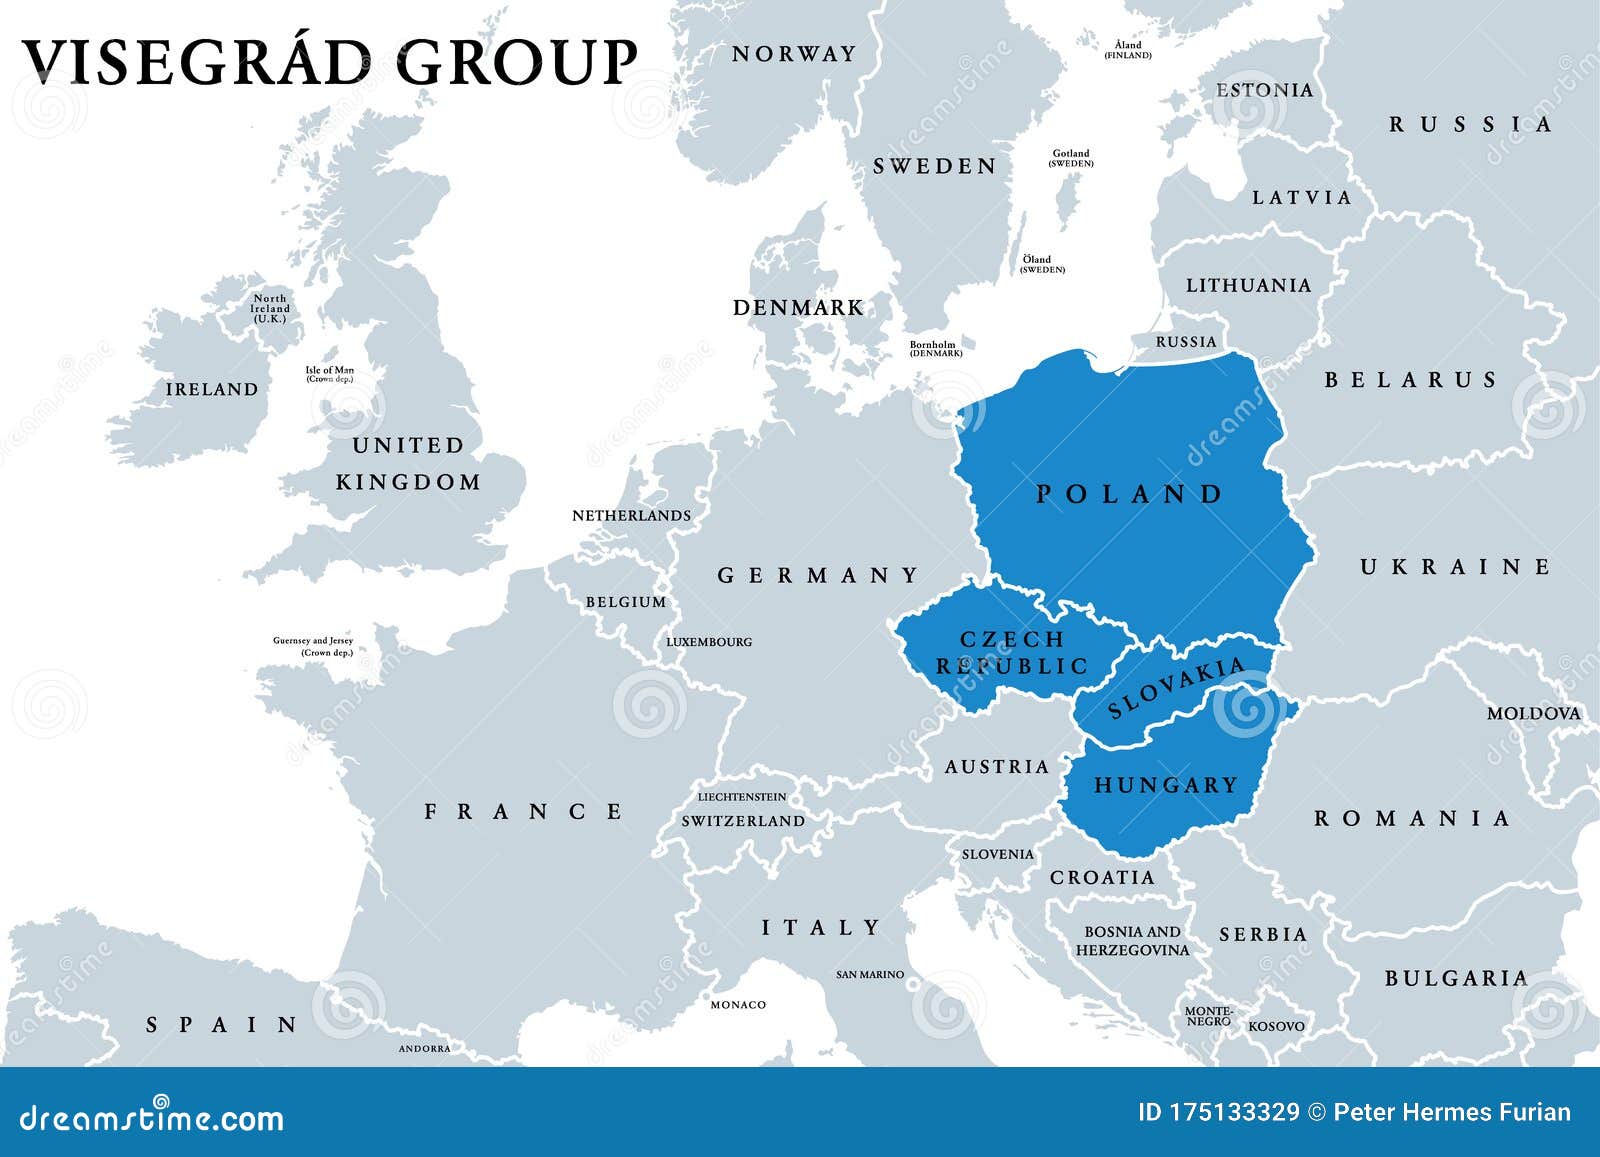 visegrÃÂ¡d group, visegrÃÂ¡d four, v4 member states political map